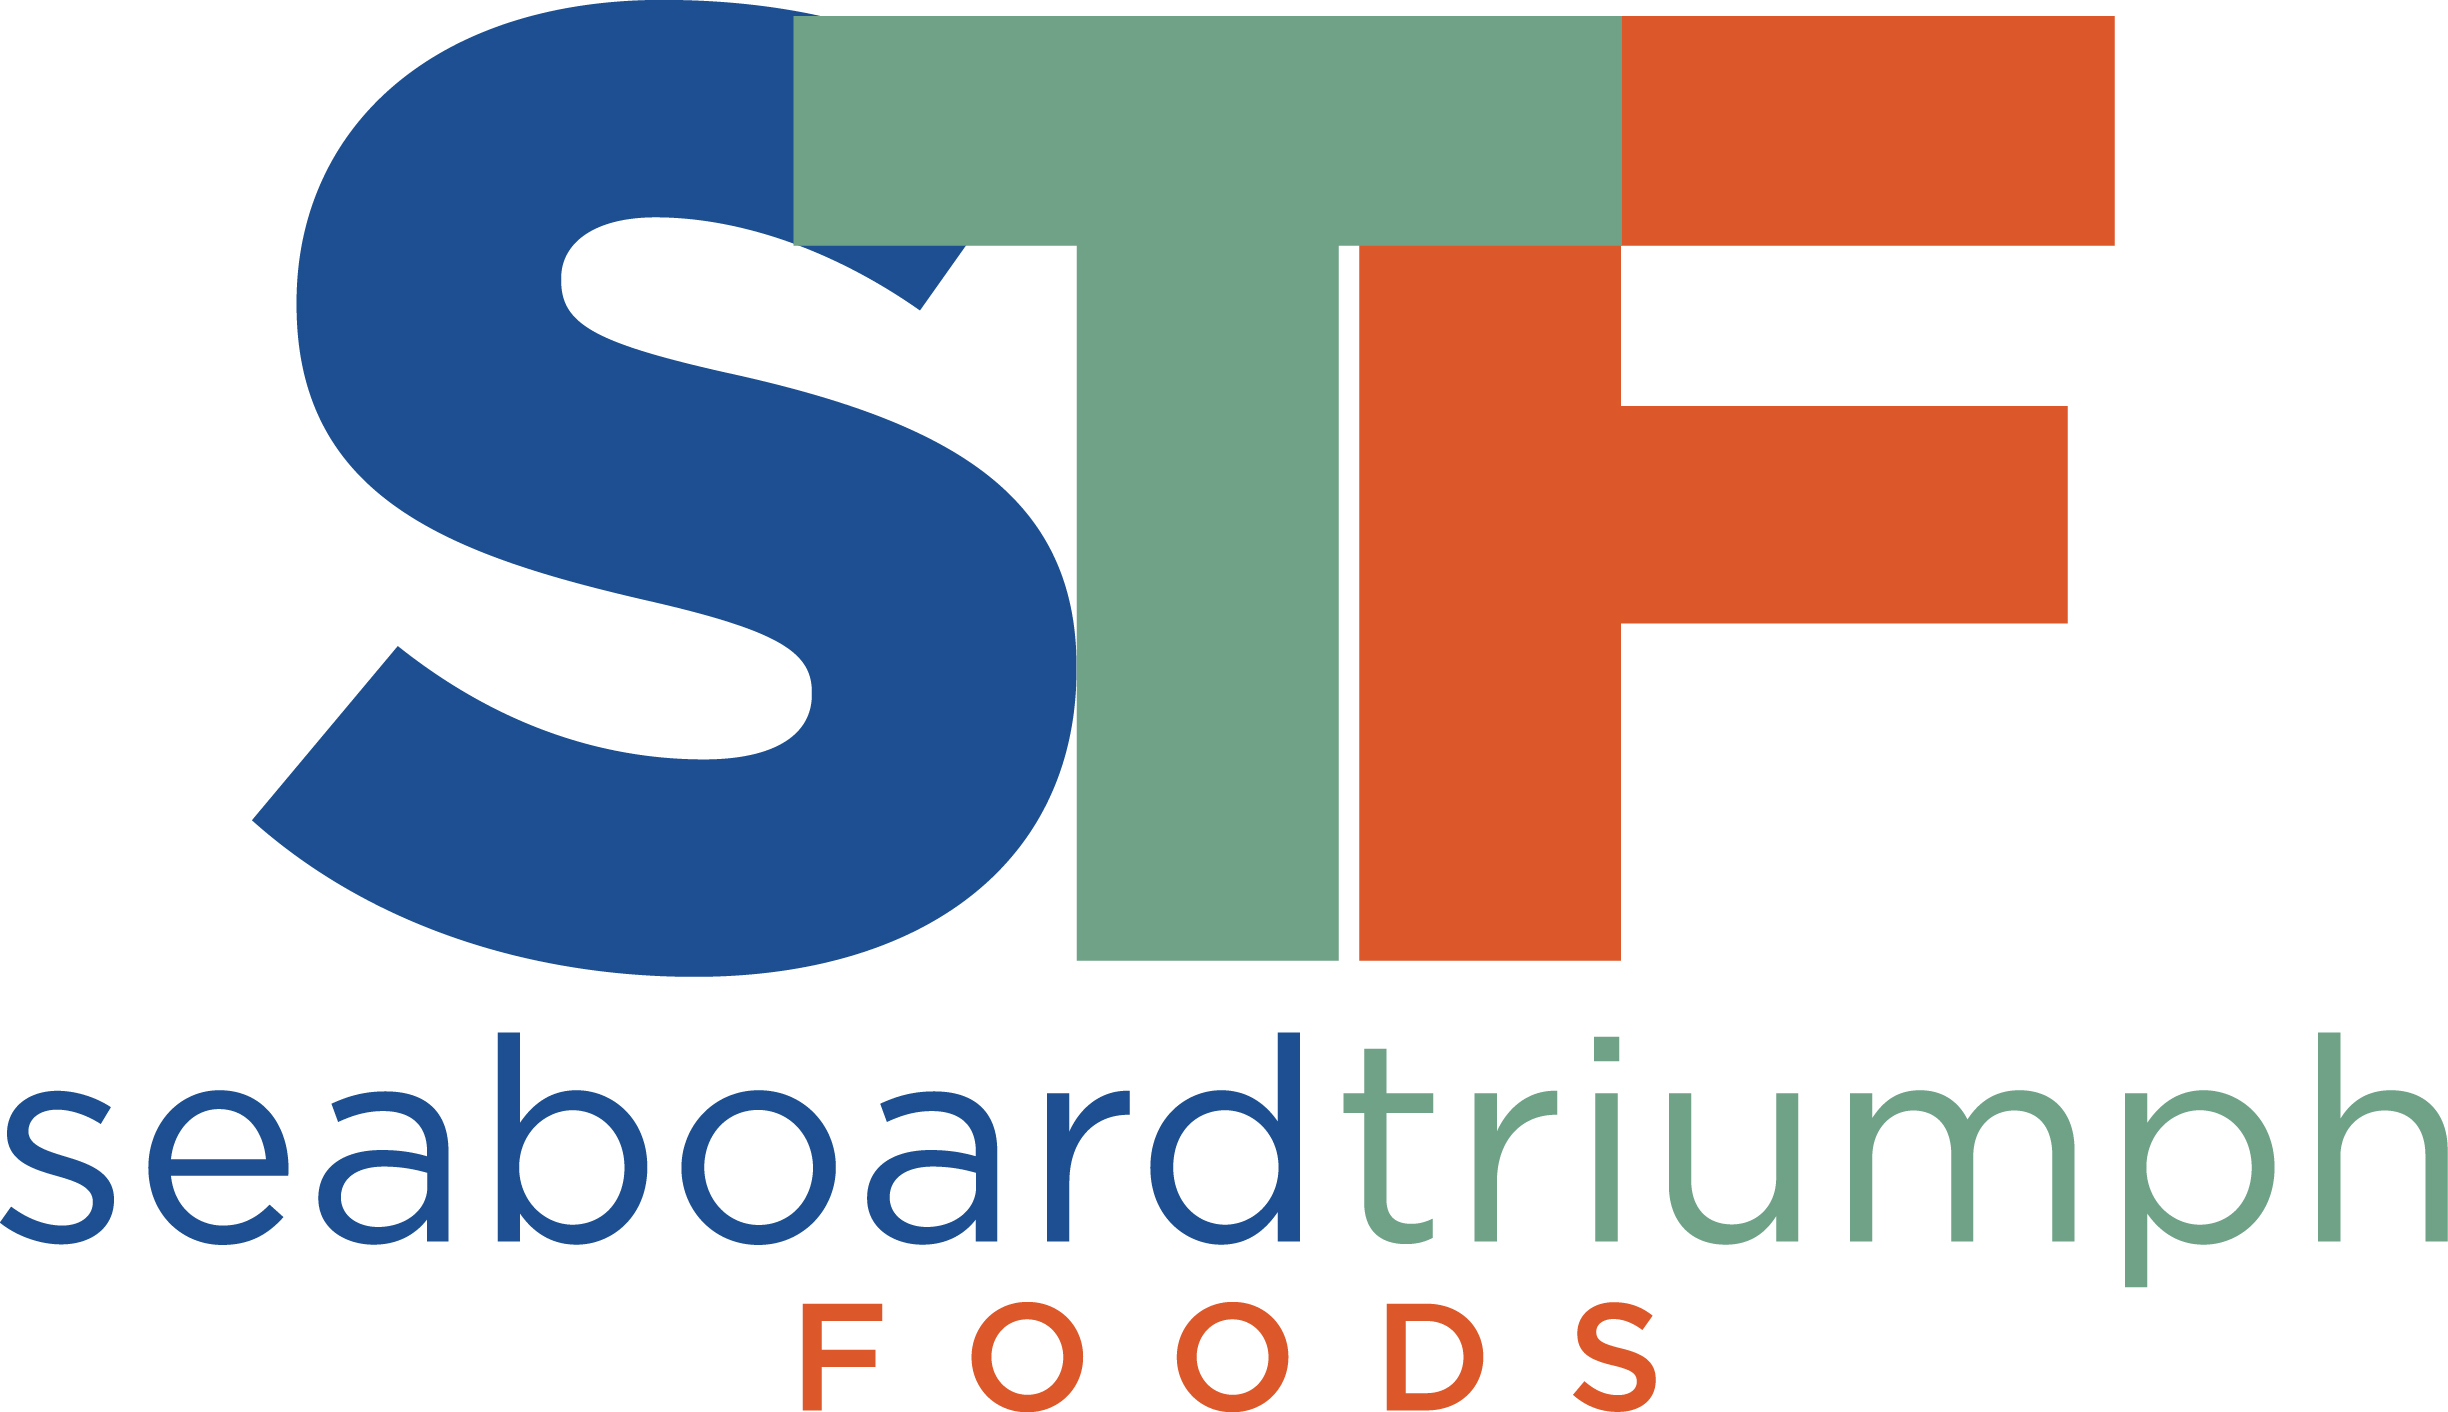 seaboard triumph foods